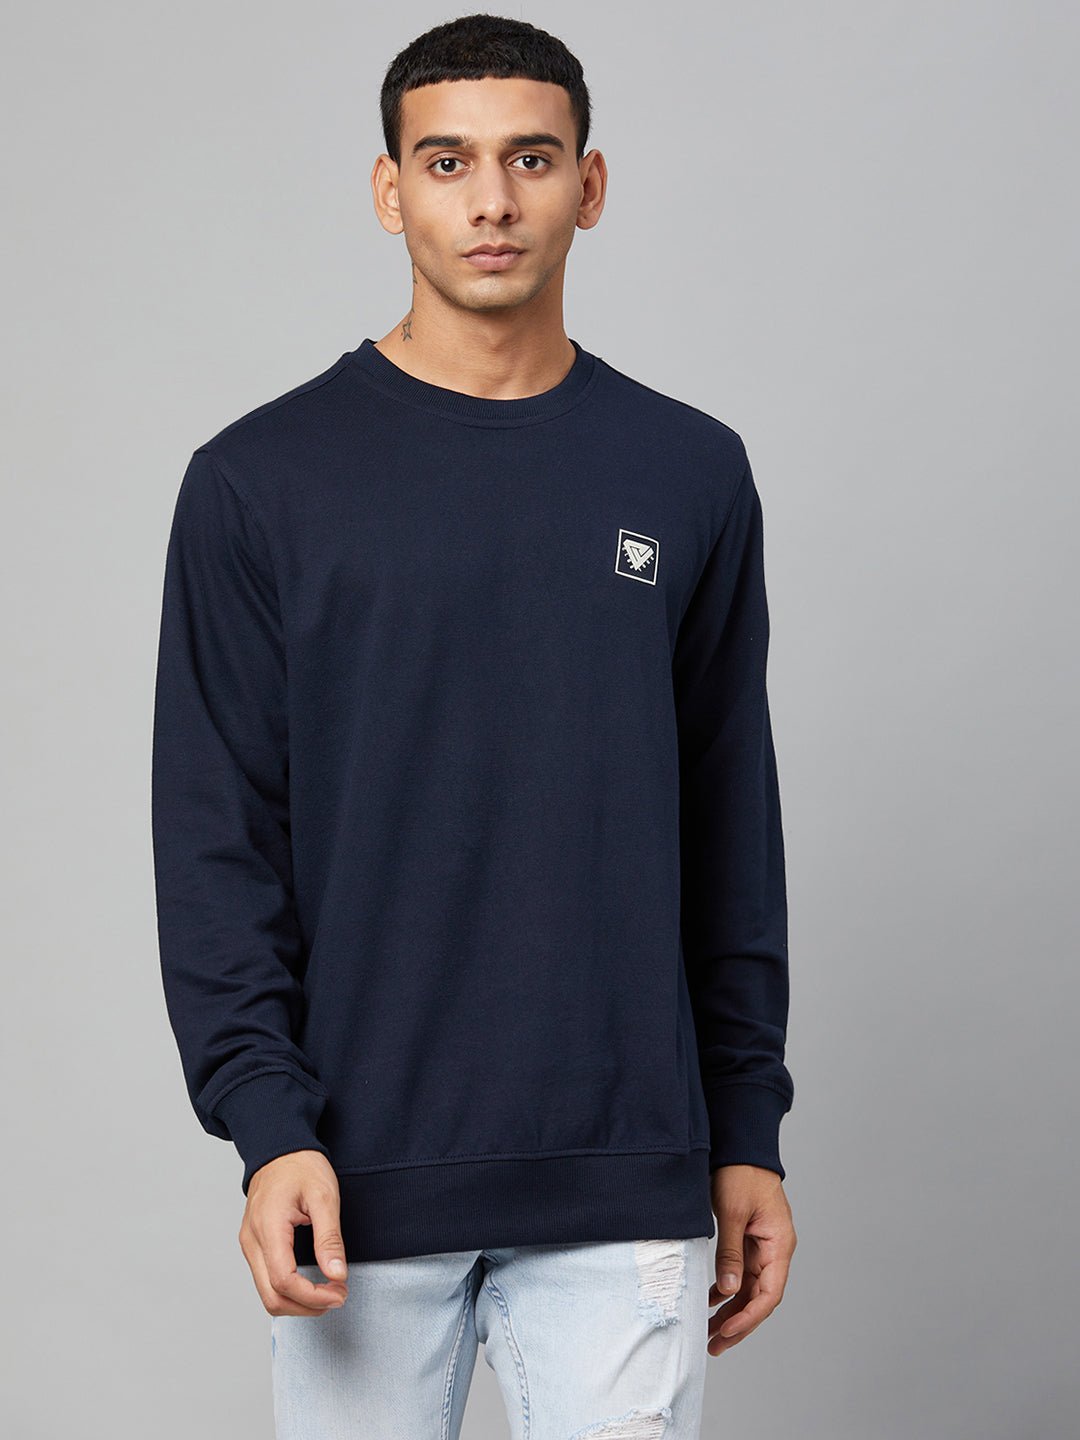 Navy Blue Sweatshirt - clubyork